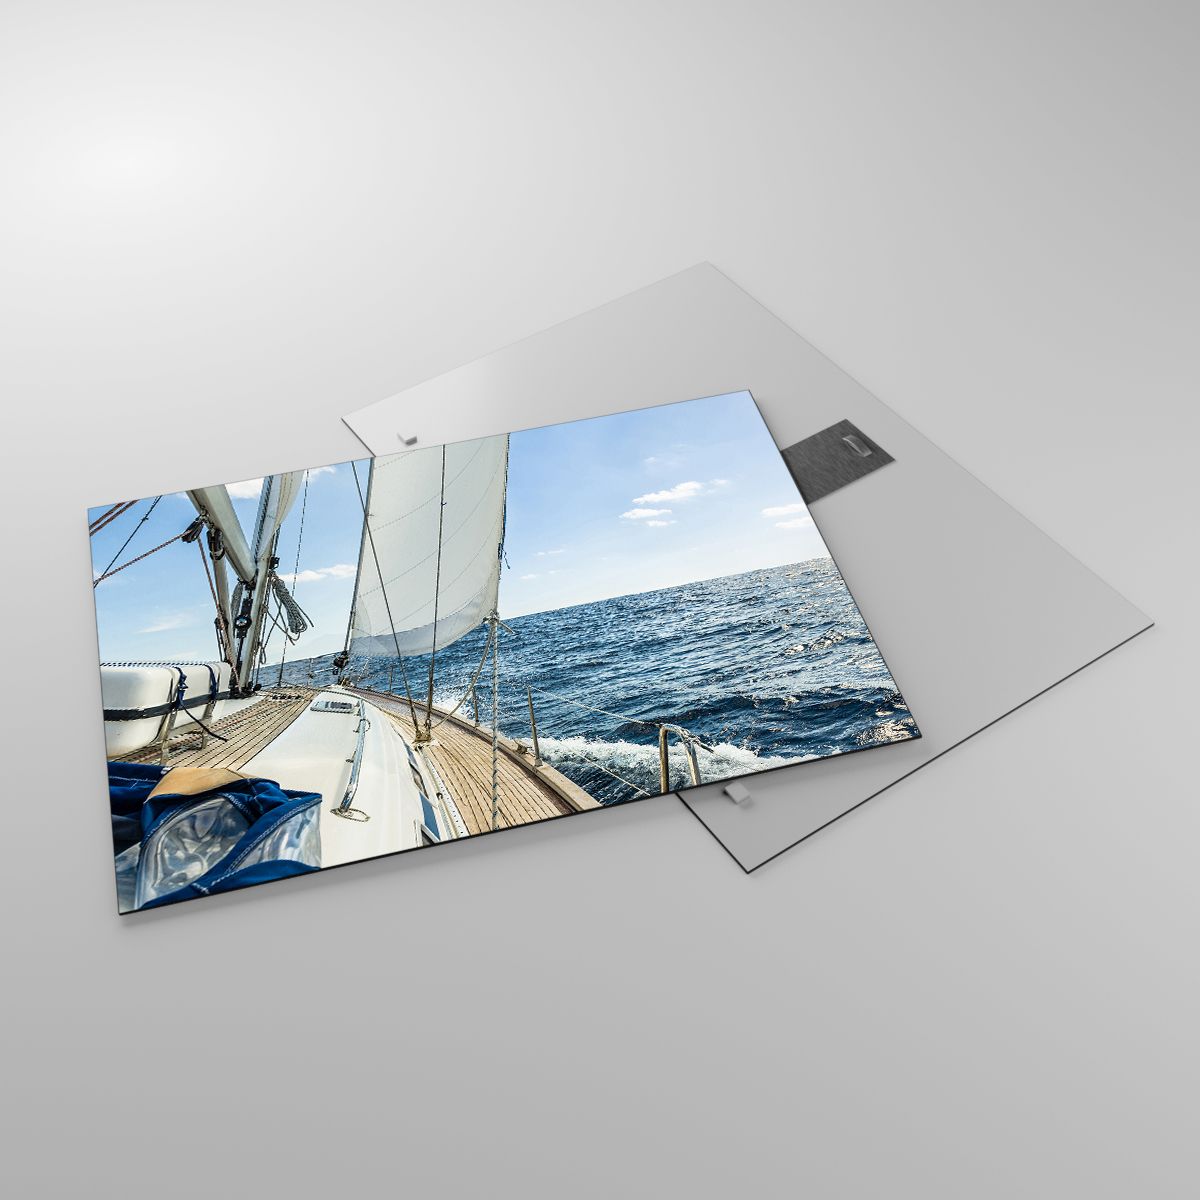 Glasbild Yacht, Glasbild Meer, Glasbild Segeln, Glasbild Reise, Glasbild Ozean